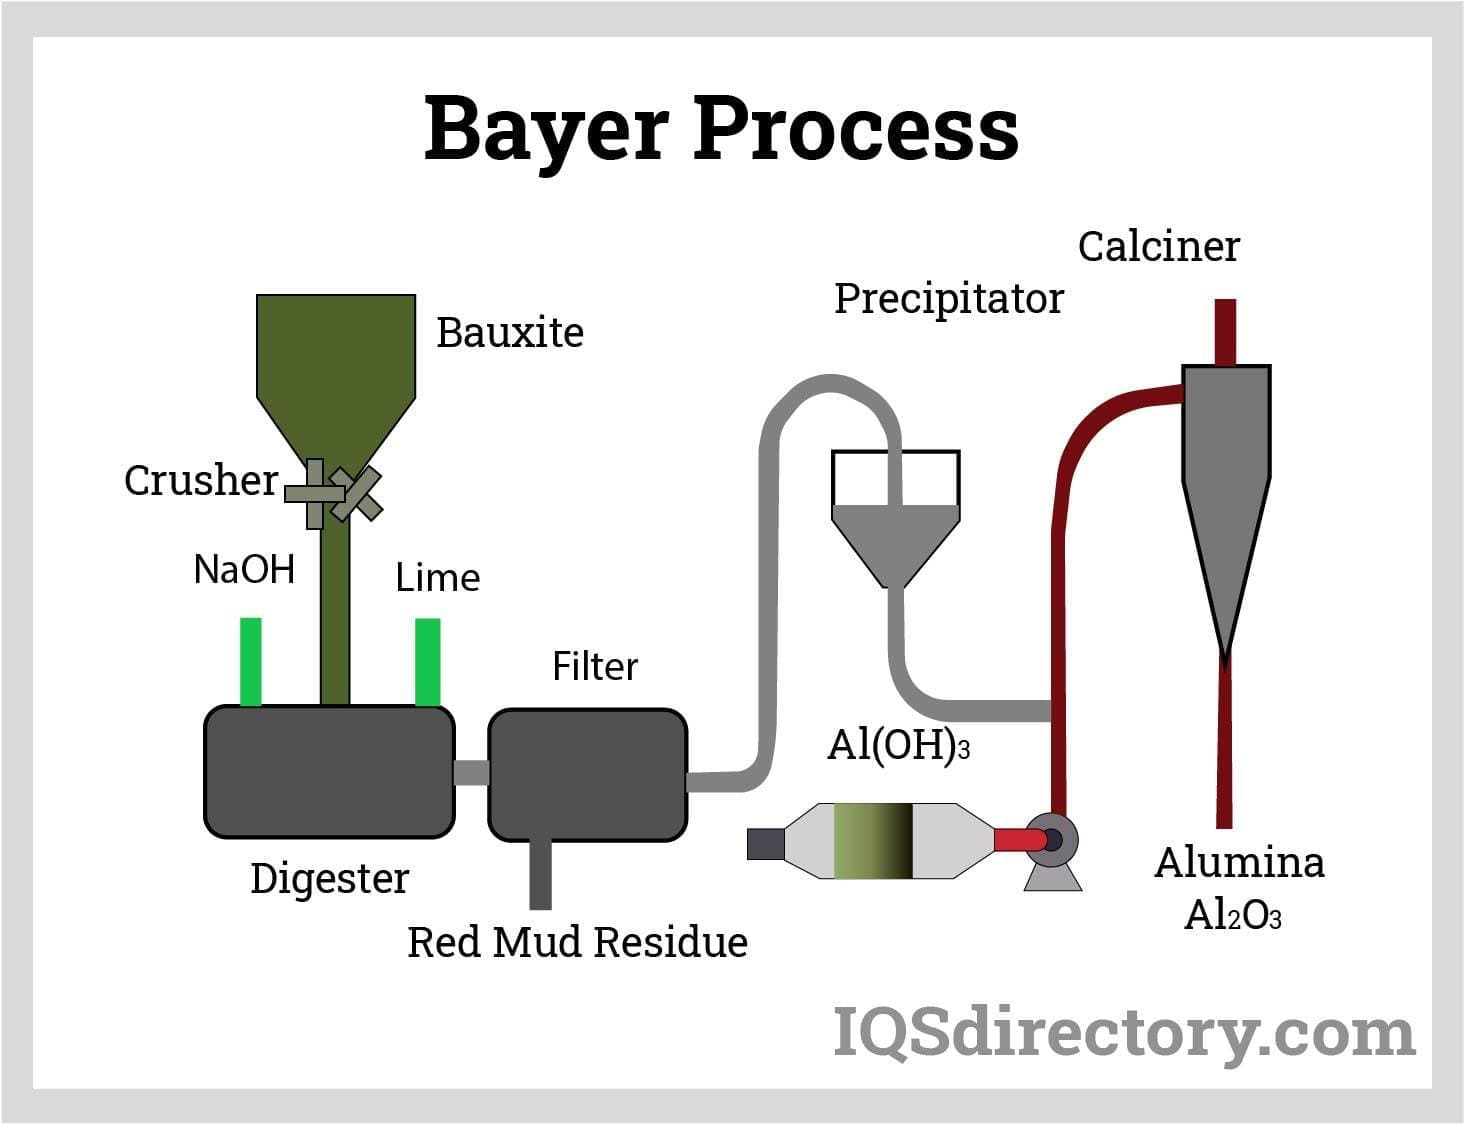 Bayer Process